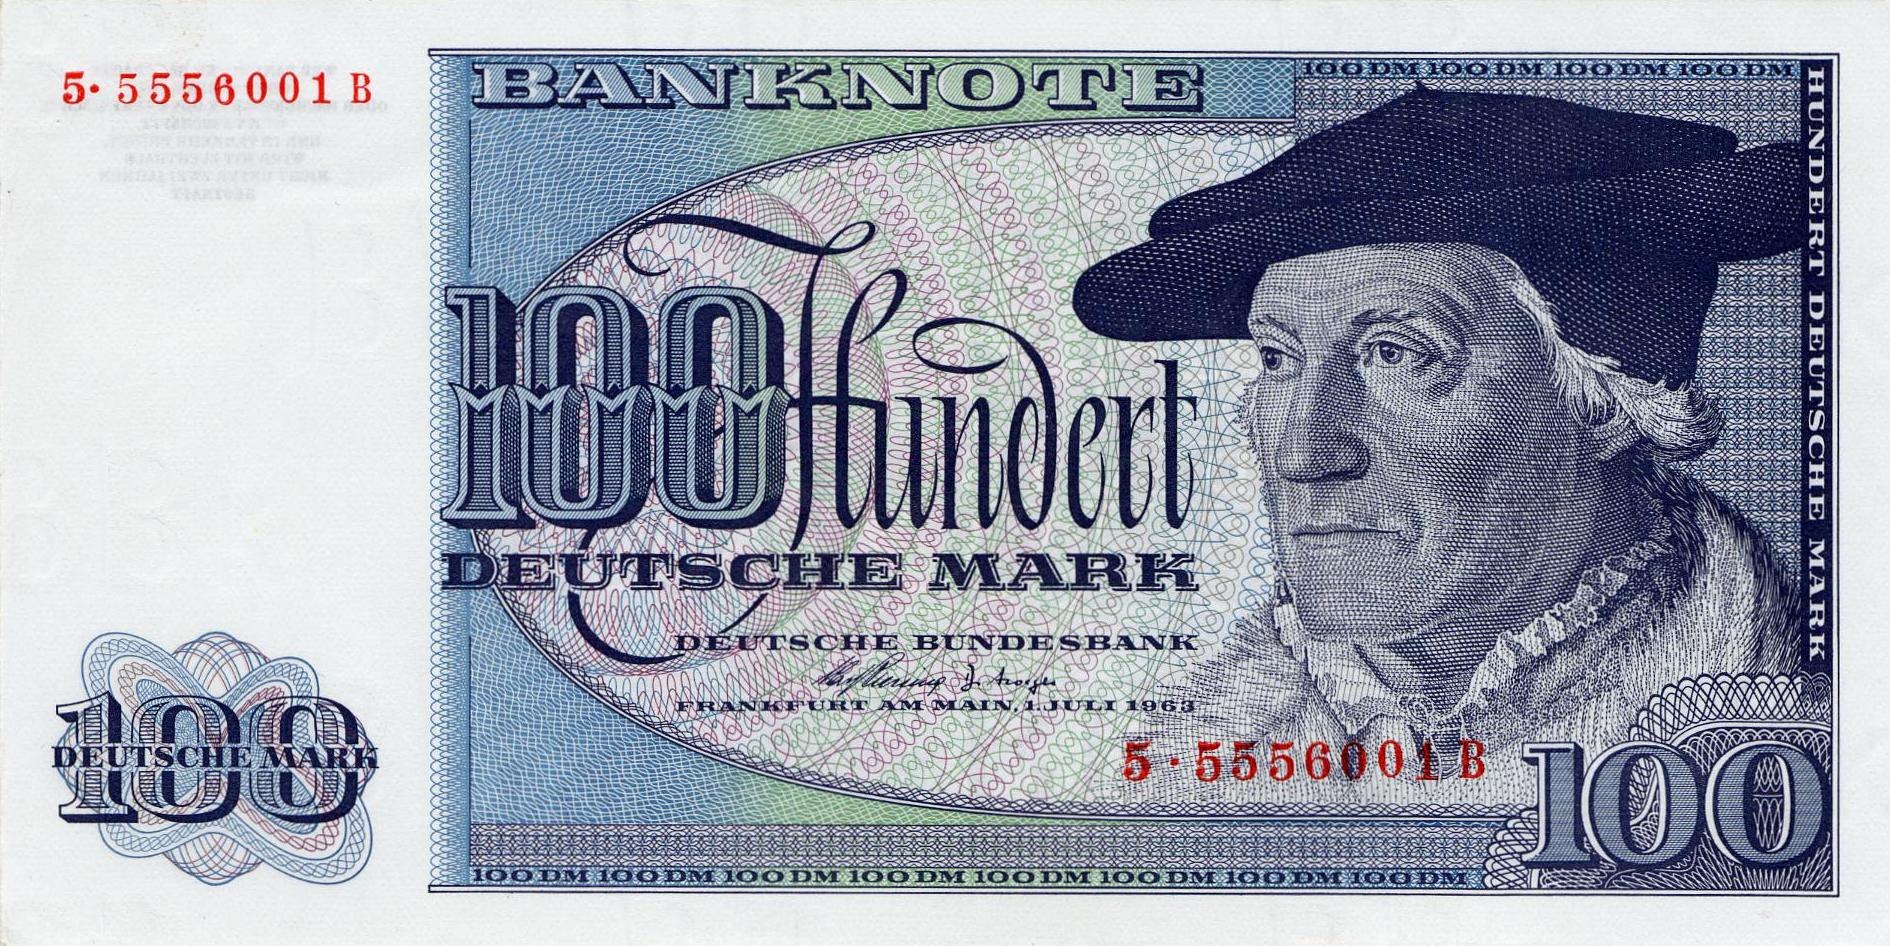 Купюра марка. 100 Дойч марок. Валюта Германии марка. Дойч марки ФРГ. 100 Марок Германия банкнота.